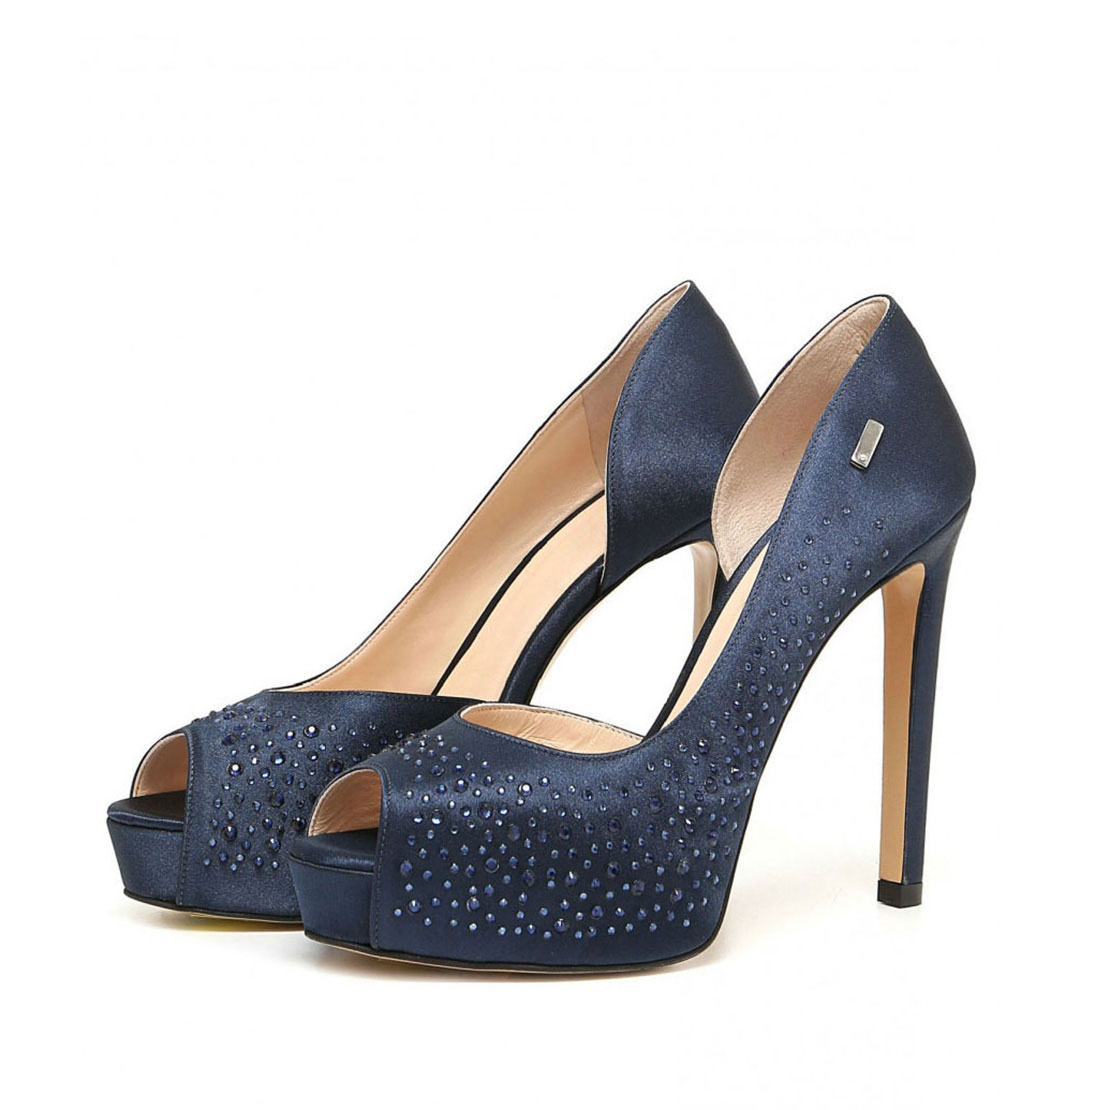  The diamond studded peep toe heels women dress shoes YB2071